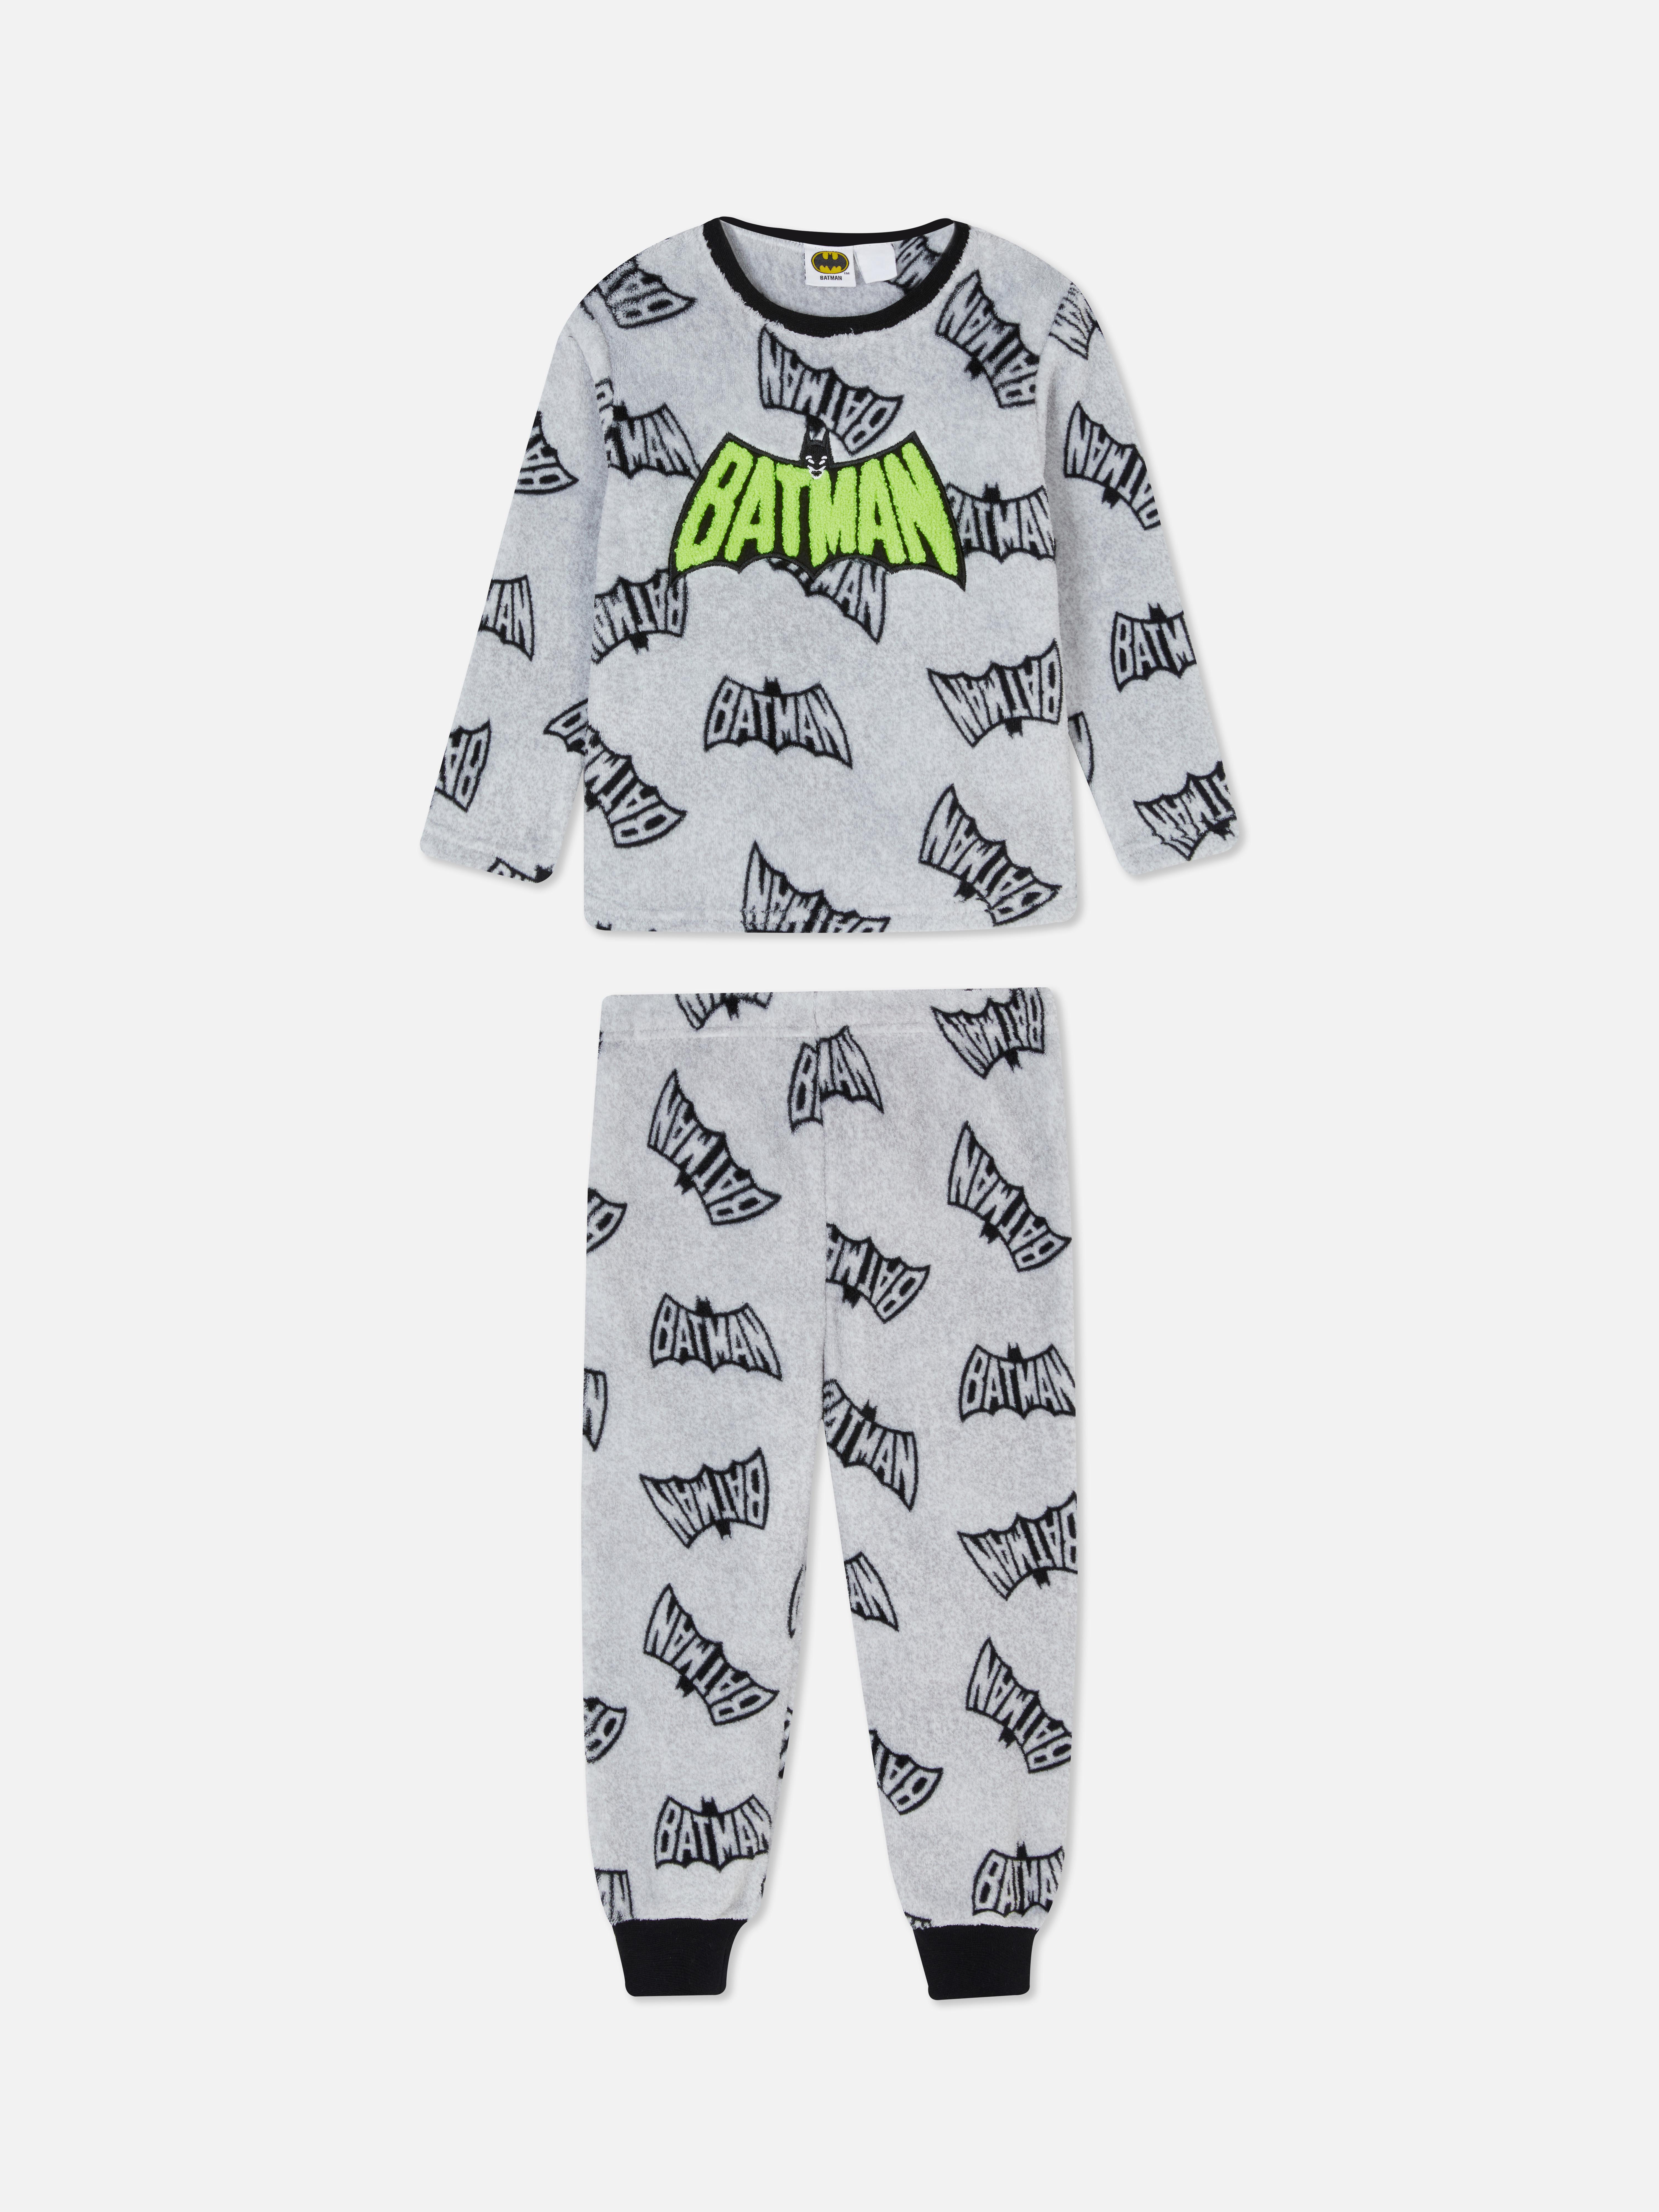 Pijama en tejido polar de Batman | Pijamas para niños | para niños | Ropa para niños | los productos Primark | Primark España